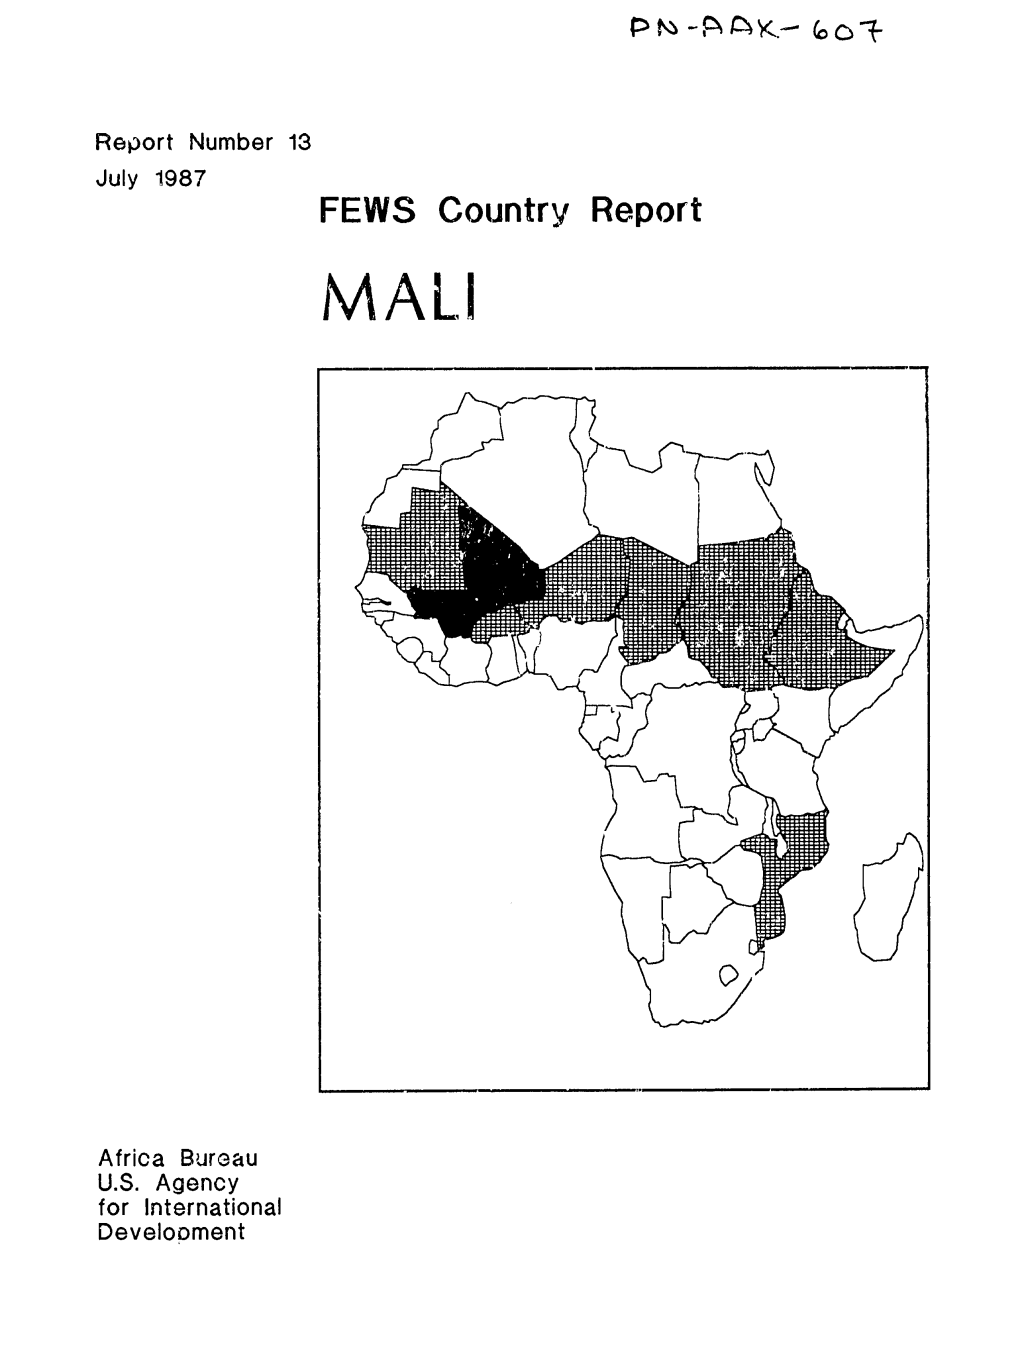 FEWS Country Report MALI